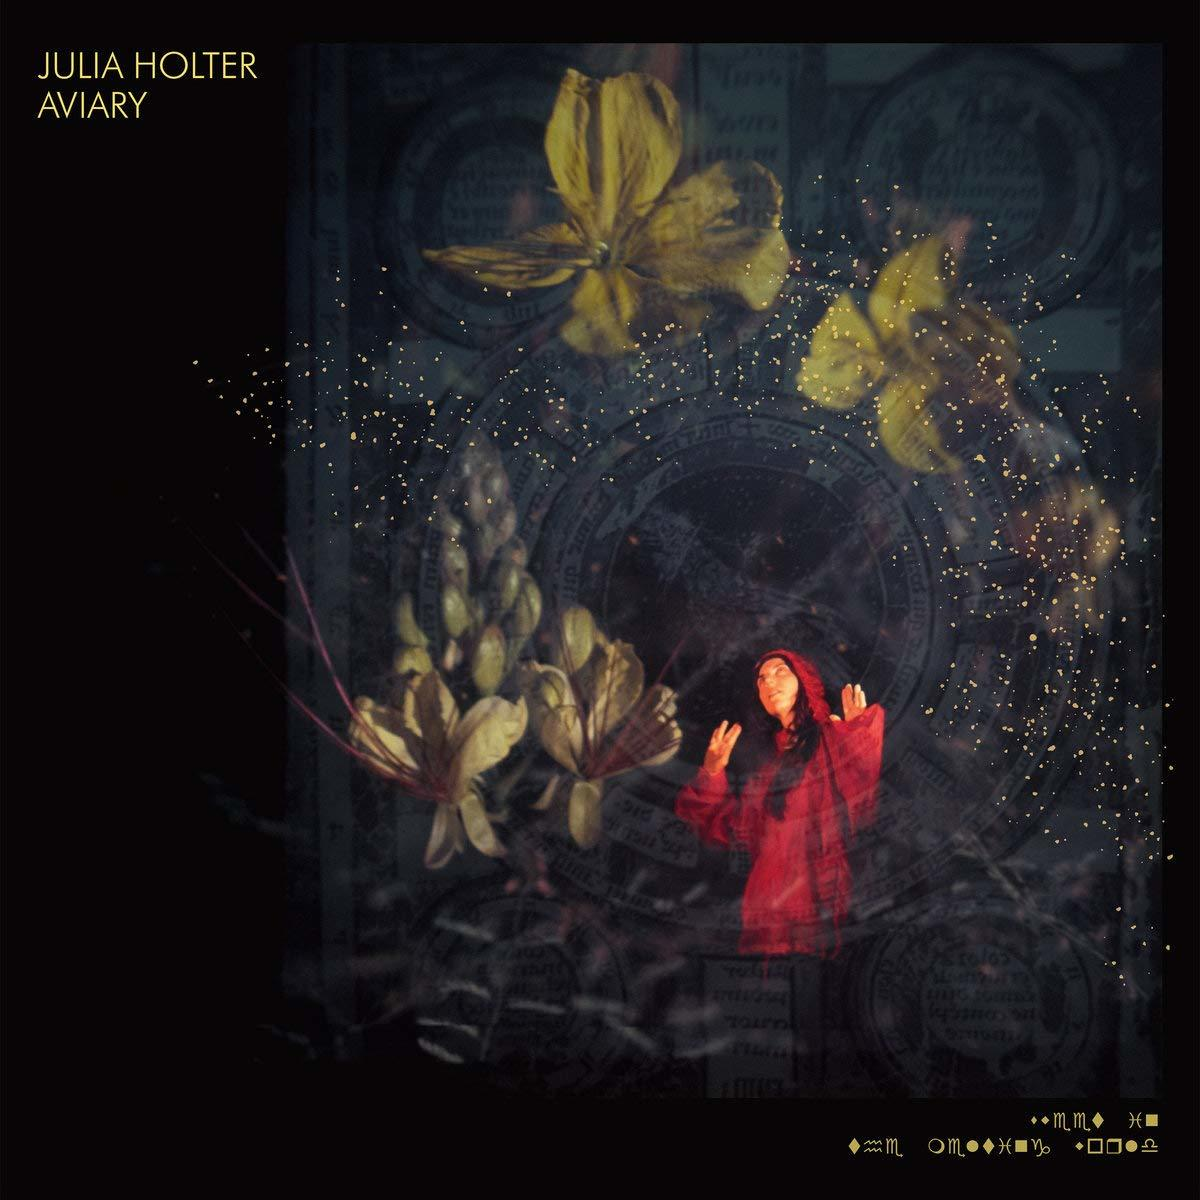 (Heavyweight (Vinyl) Holter Aviary - - Julia 2LP+MP3)